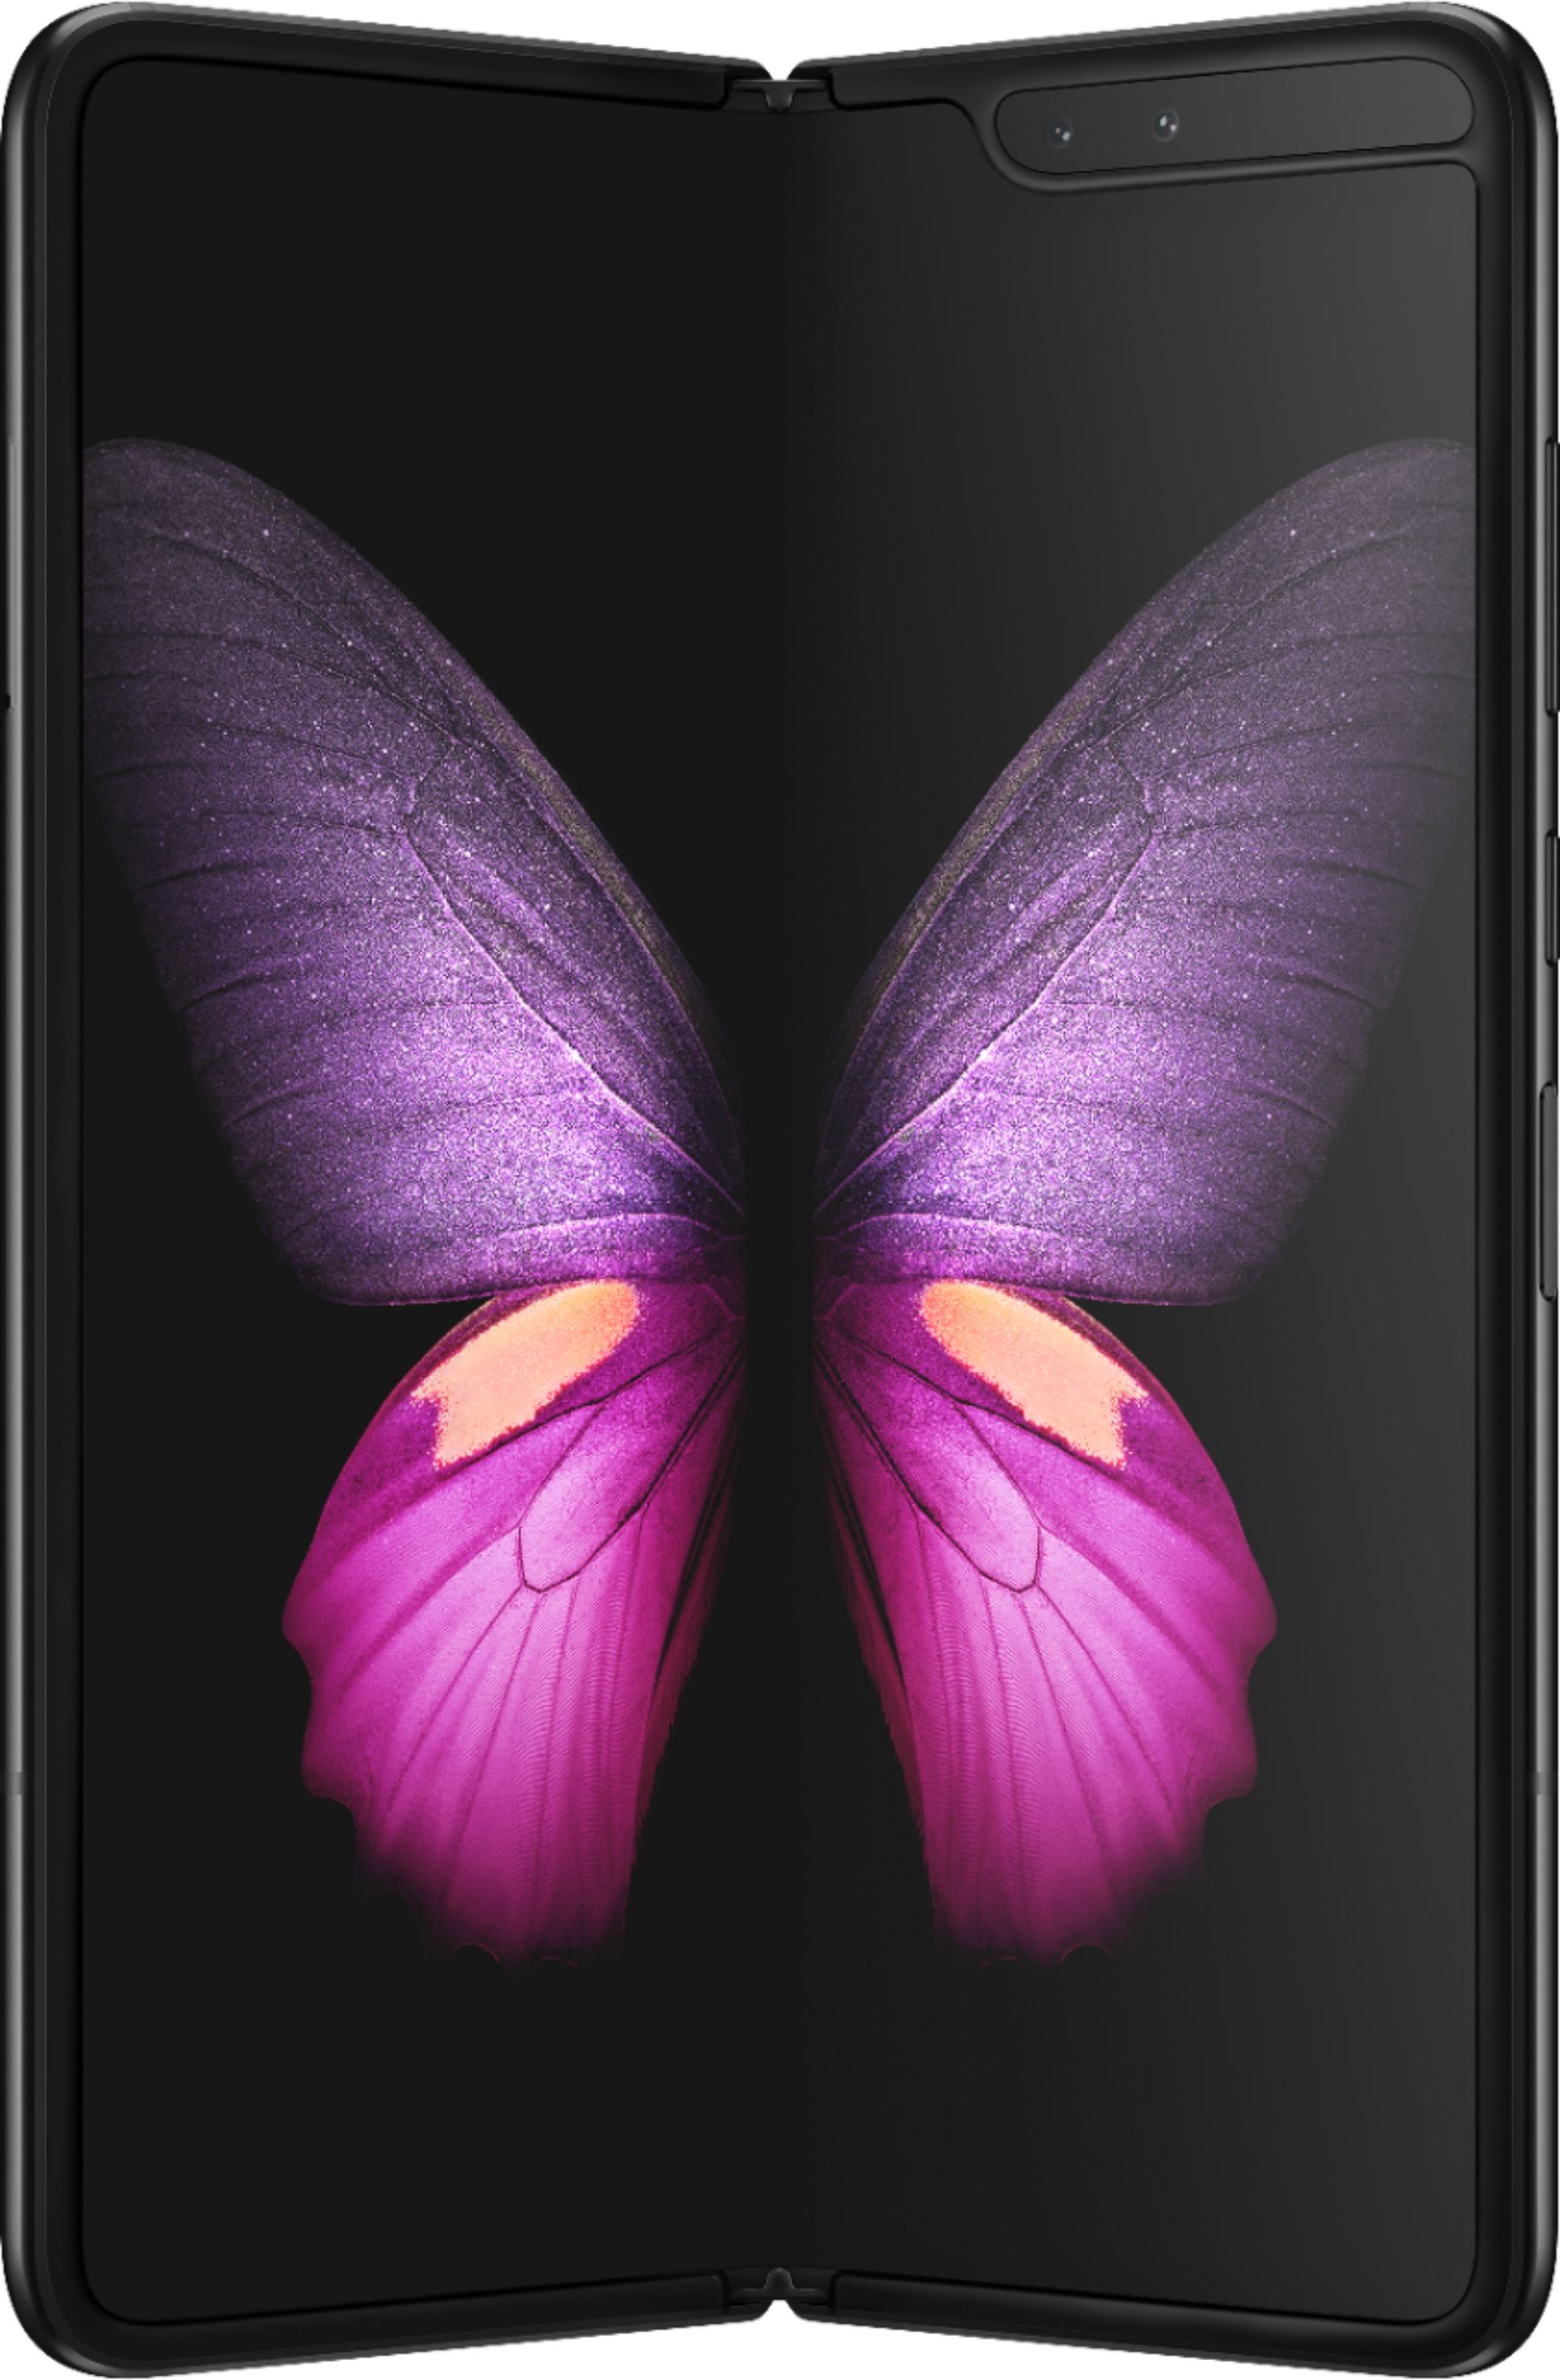 Samsung Sam-galaxy Z Fold 2, Memory Size: 32GB, Screen Size: 5.5